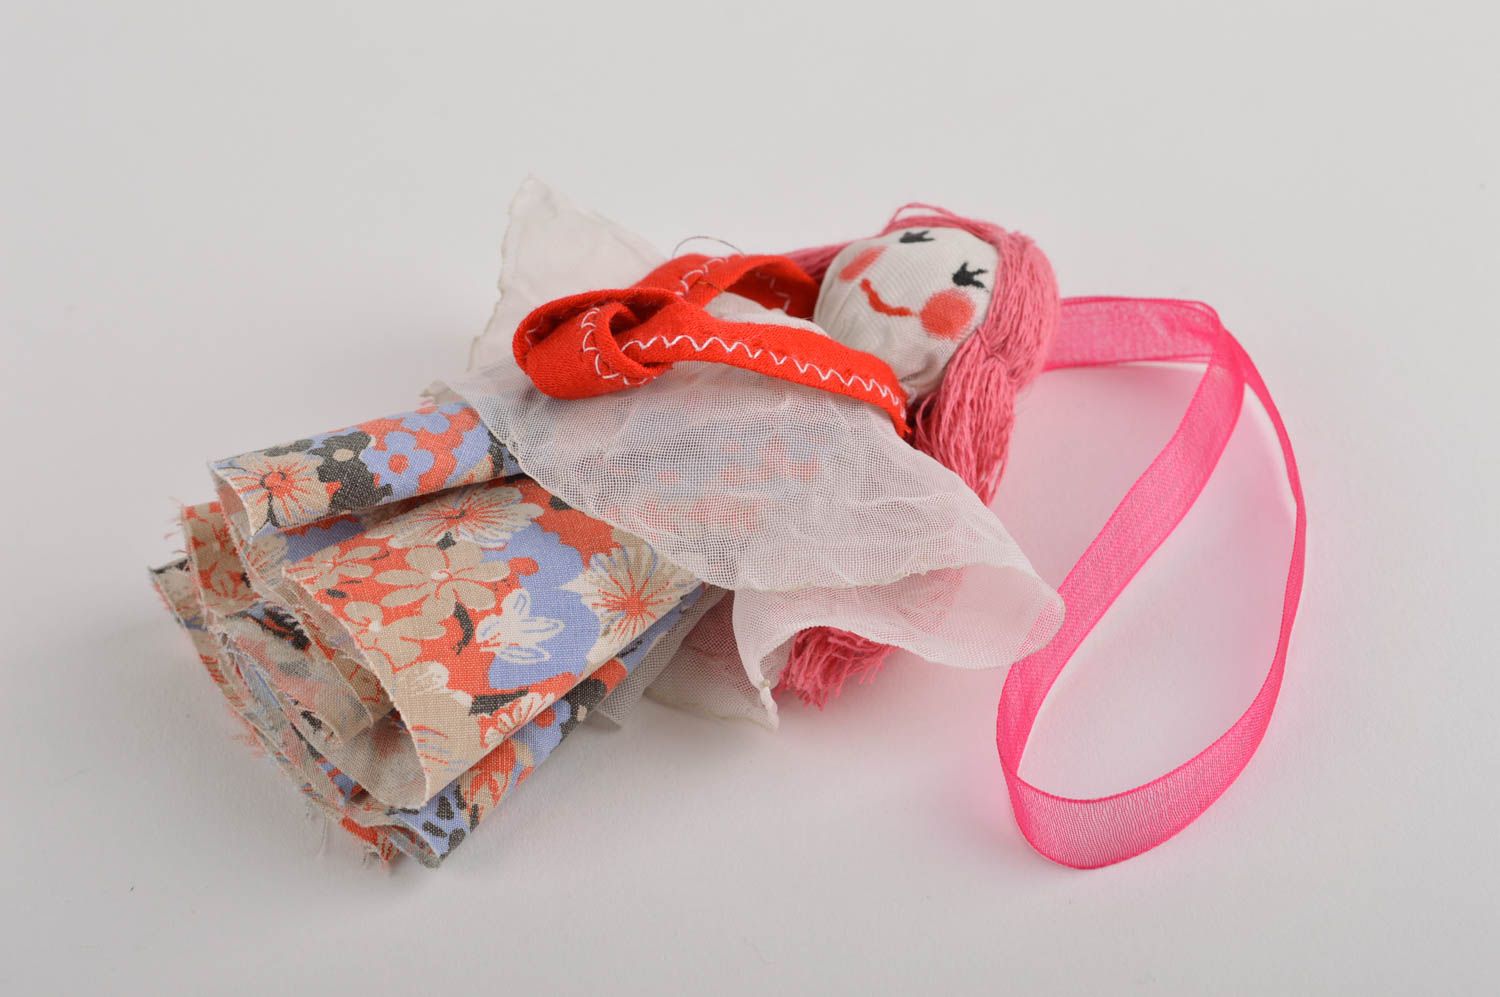 Unusual handmade soft keychain toy bag charm phone charm design gift ideas photo 3